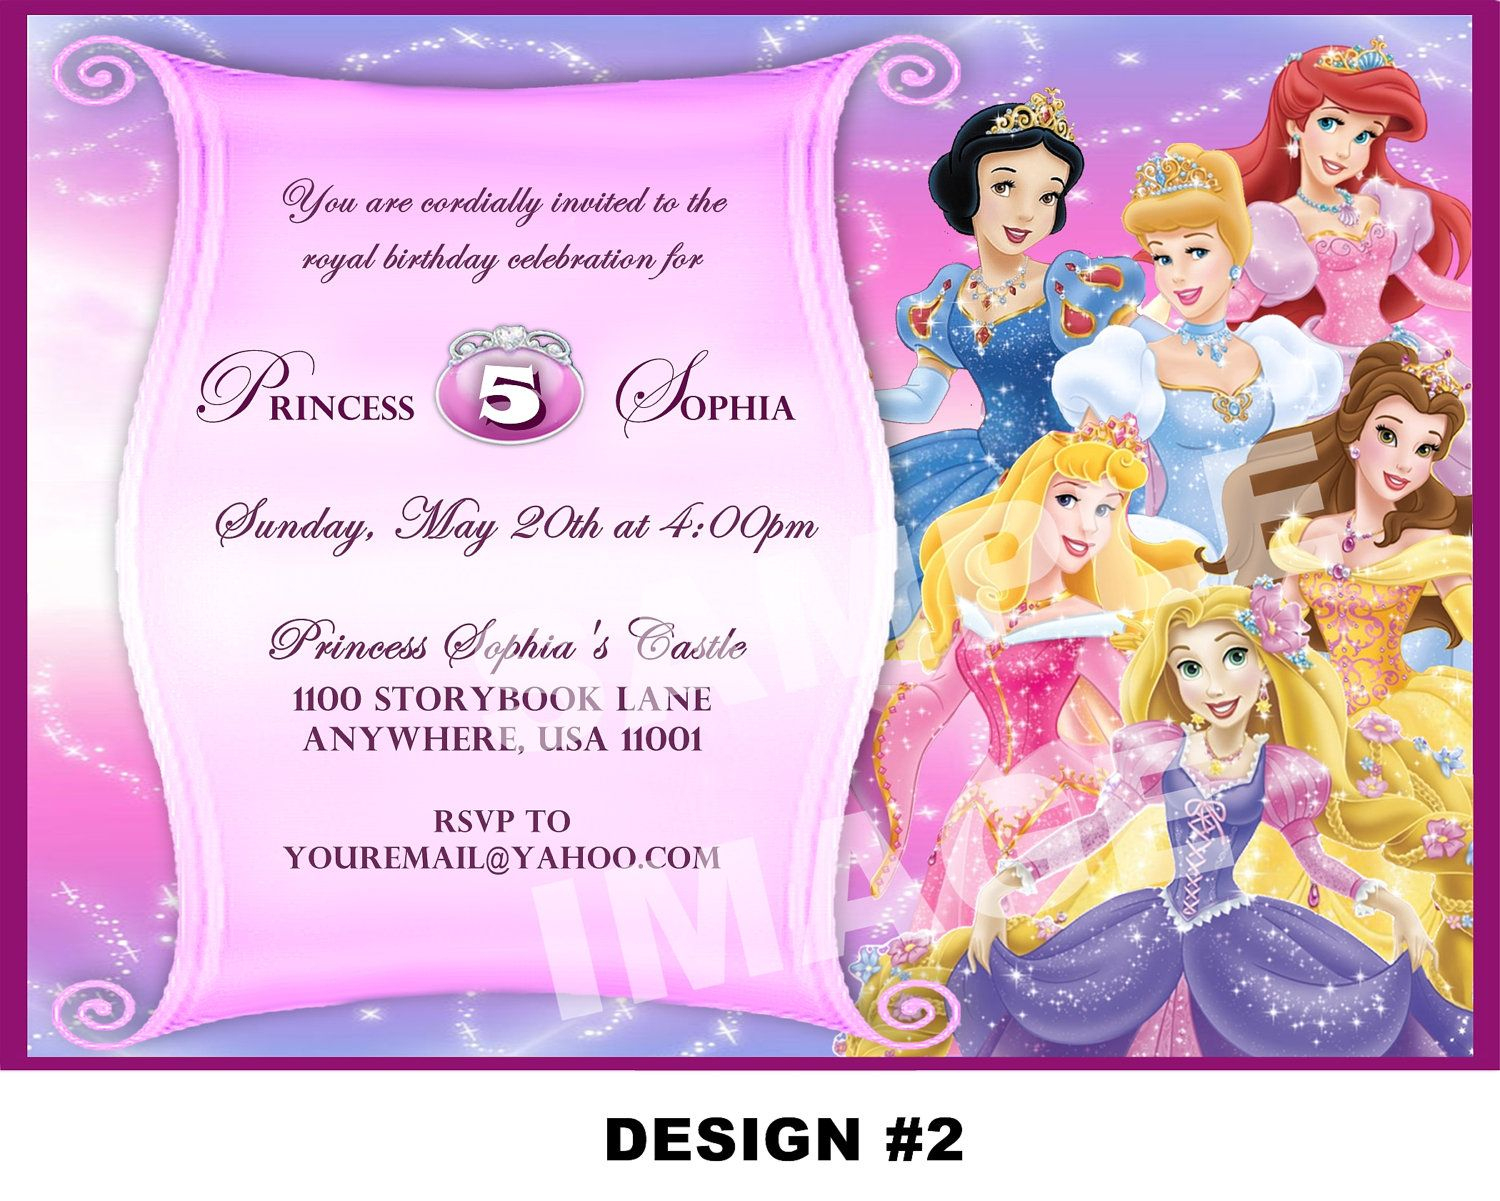 Disney Princess Birthday Invitation Card Maker Free | Party In 2019 - Free Printable Princess Invitation Cards